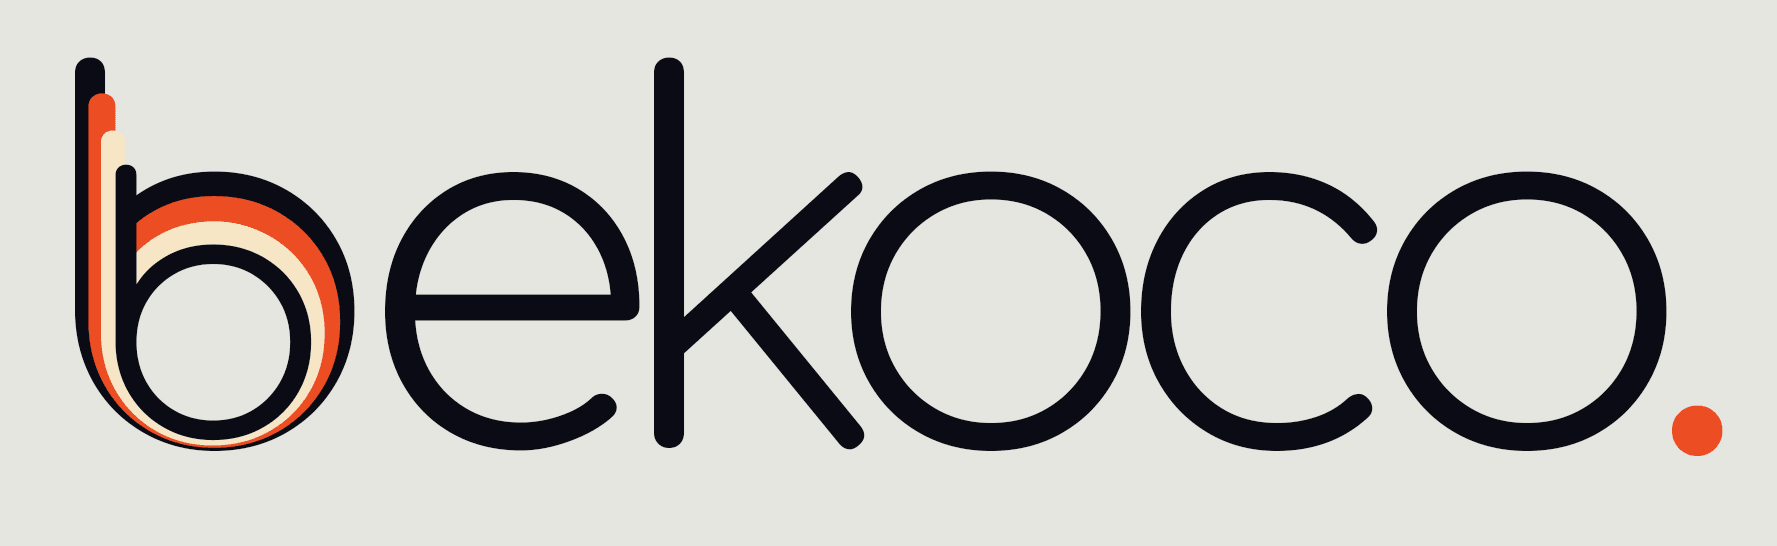 bekoco banner